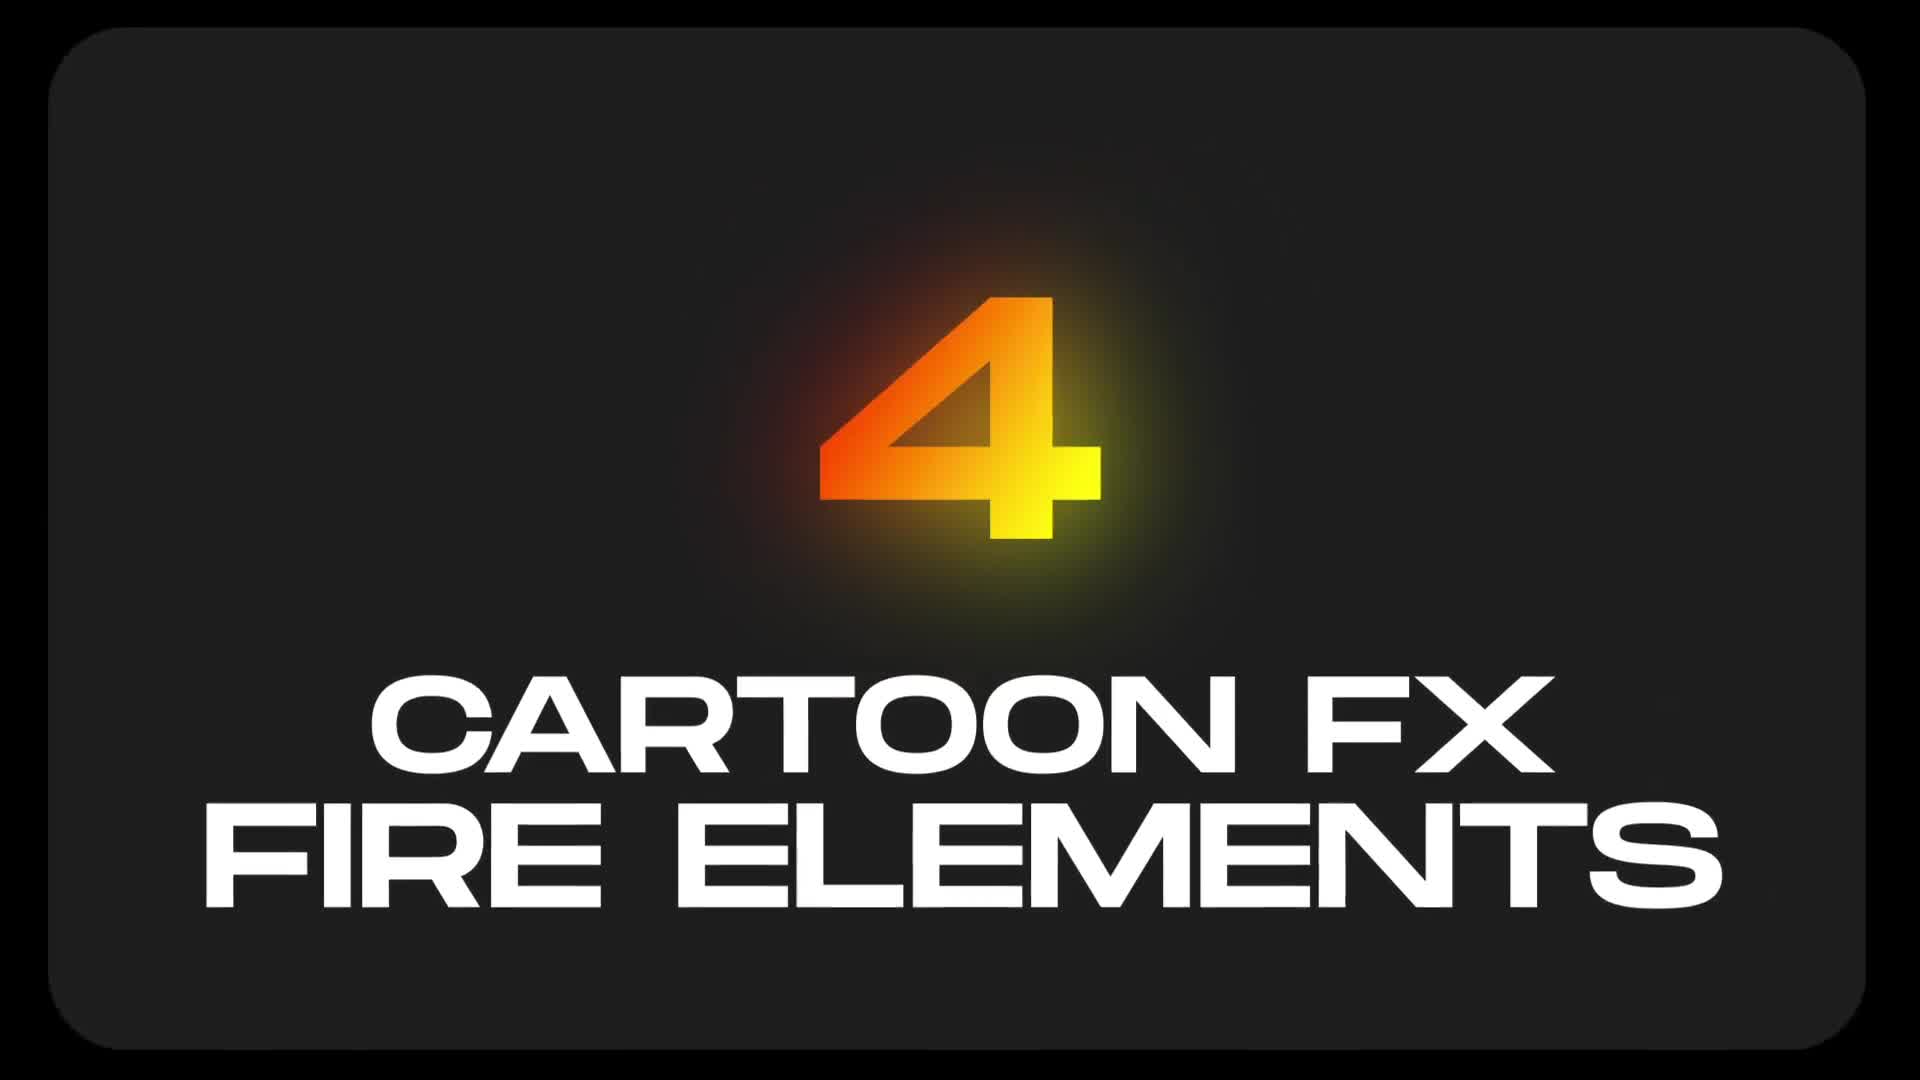 Electric Cartoon FX for Premiere Pro Videohive 36300932 Premiere Pro Image 1